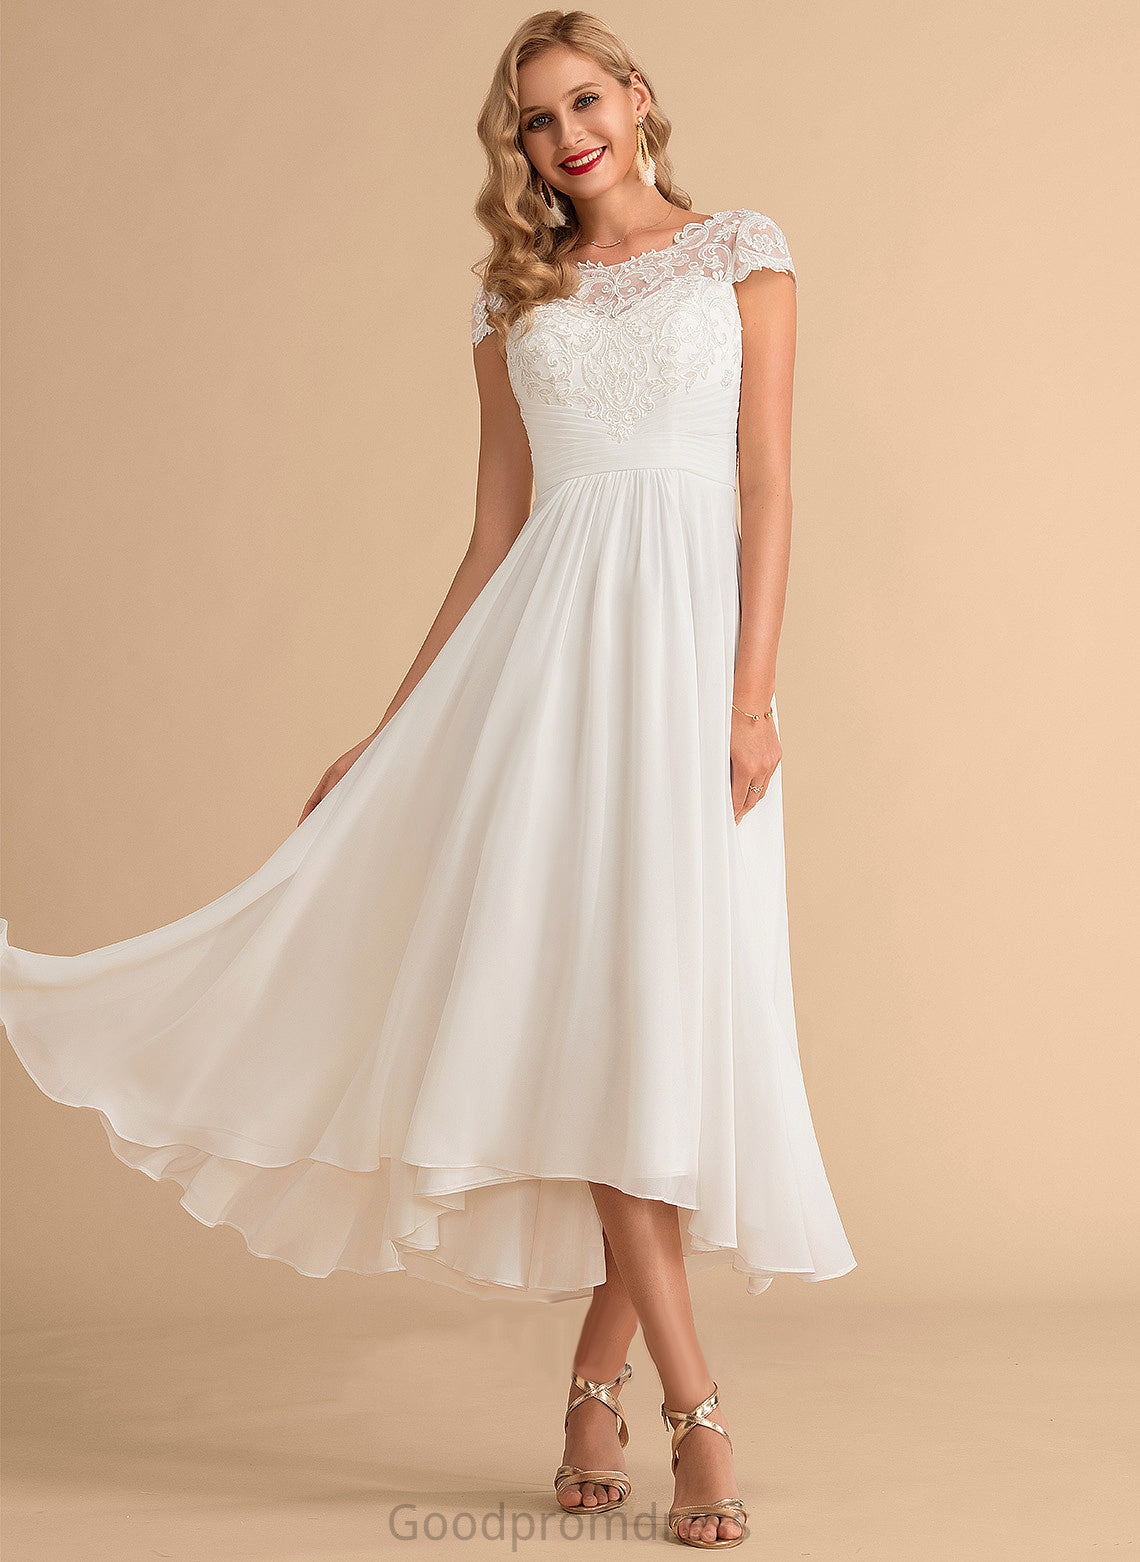 Casey Wedding Chiffon A-Line Dress Asymmetrical Lace Wedding Dresses Scoop